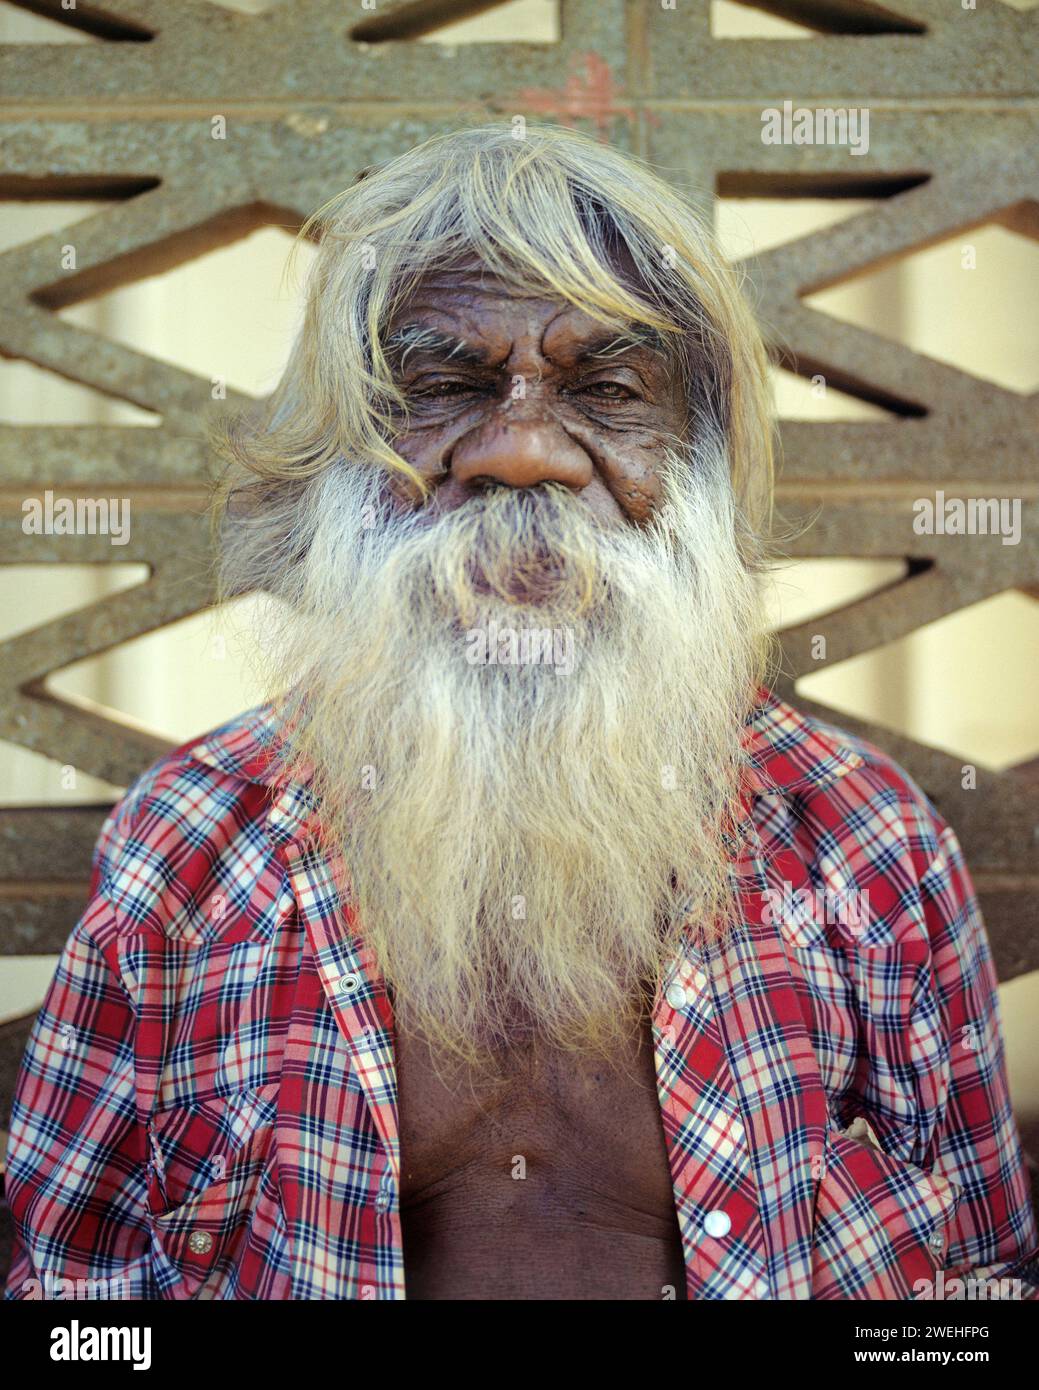 an Australian aborigine with grey hair and beard Stock Photo